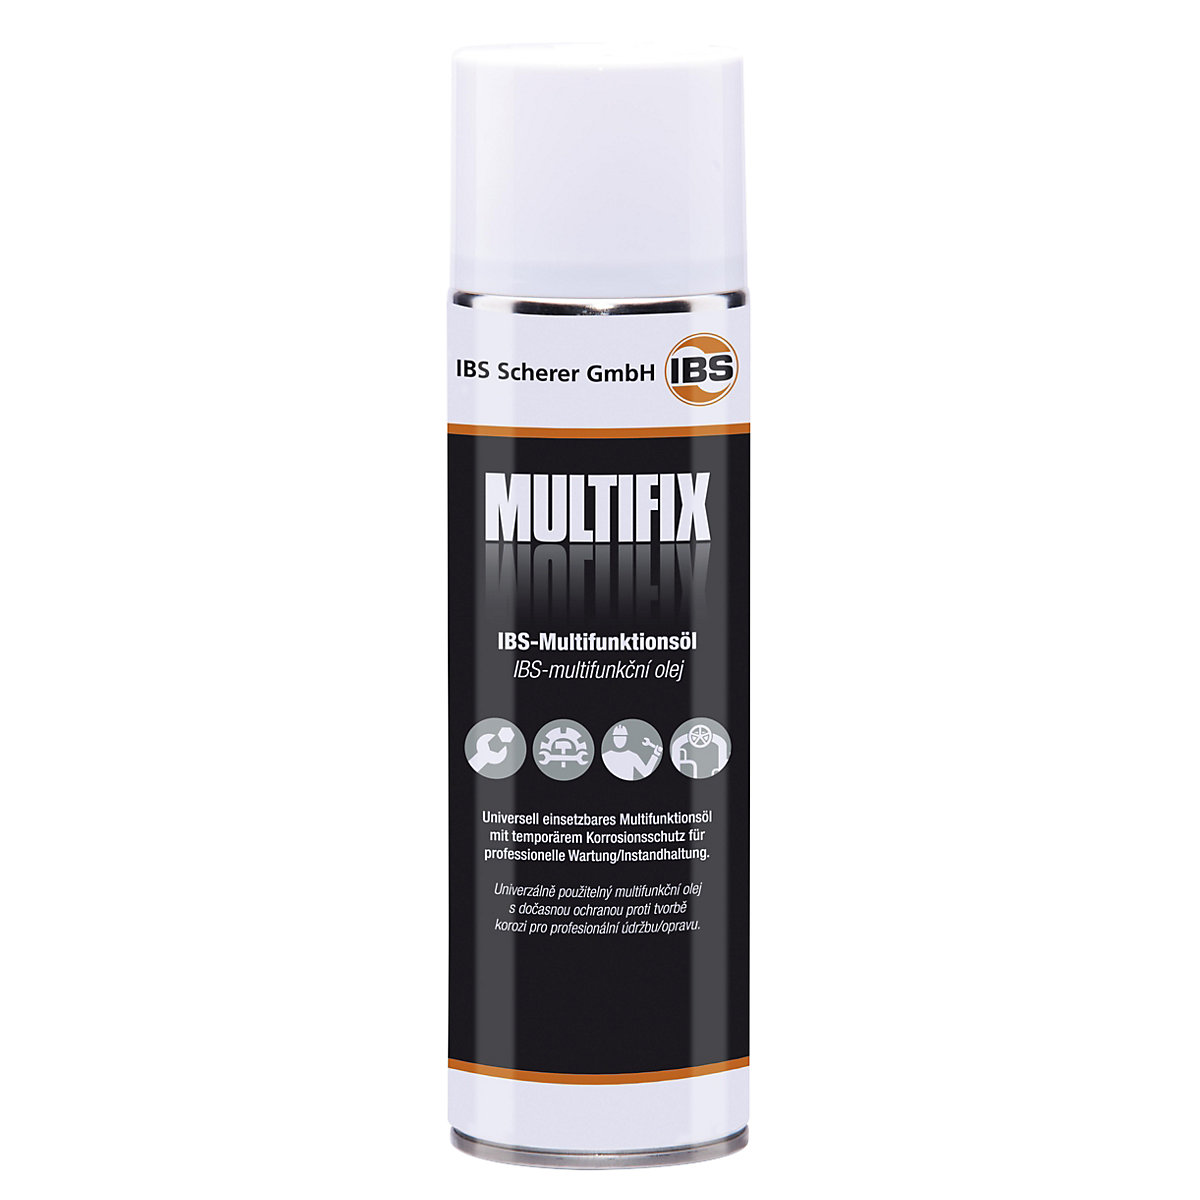 MULTIFIX multifunction oil - IBS Scherer